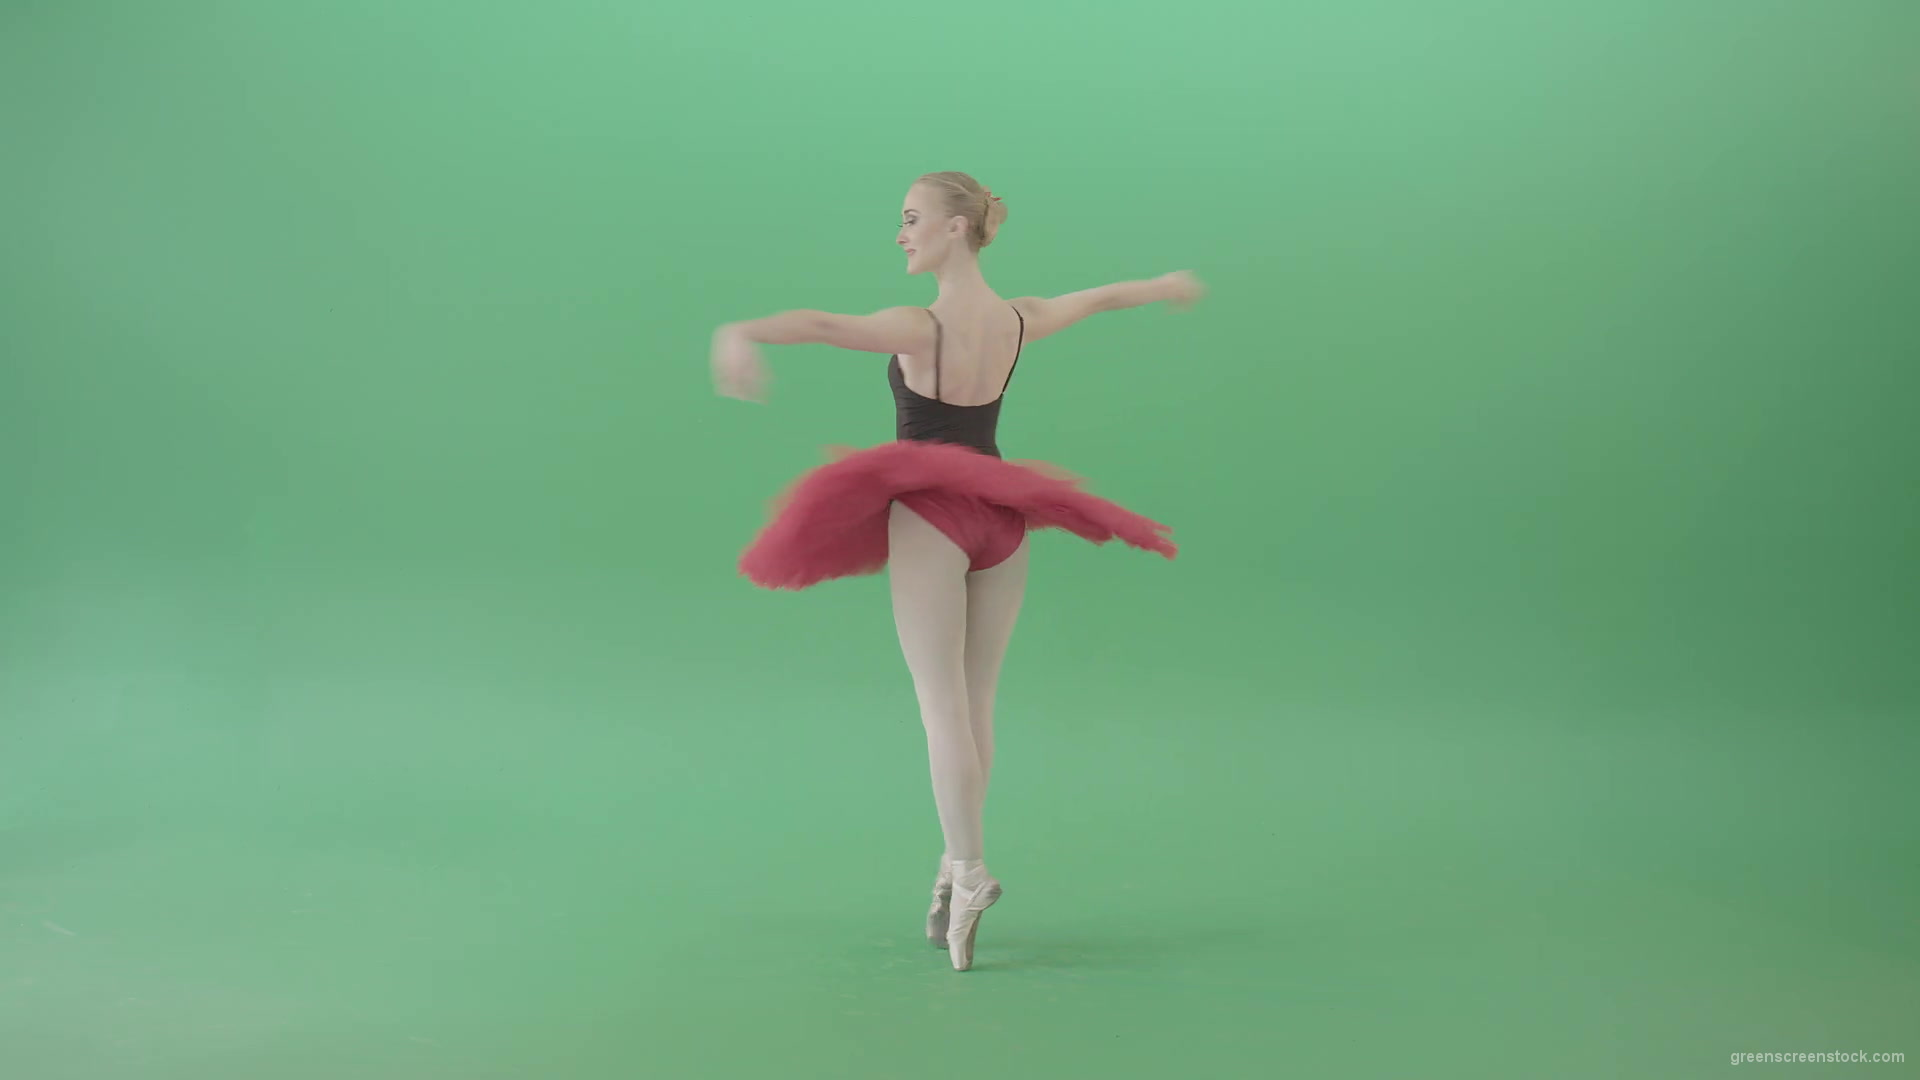 Happy-smiling-ballet-girl-ballerina-spinning-in-dance-on-green-screen-4K-Video-Footage-1920_004 Green Screen Stock